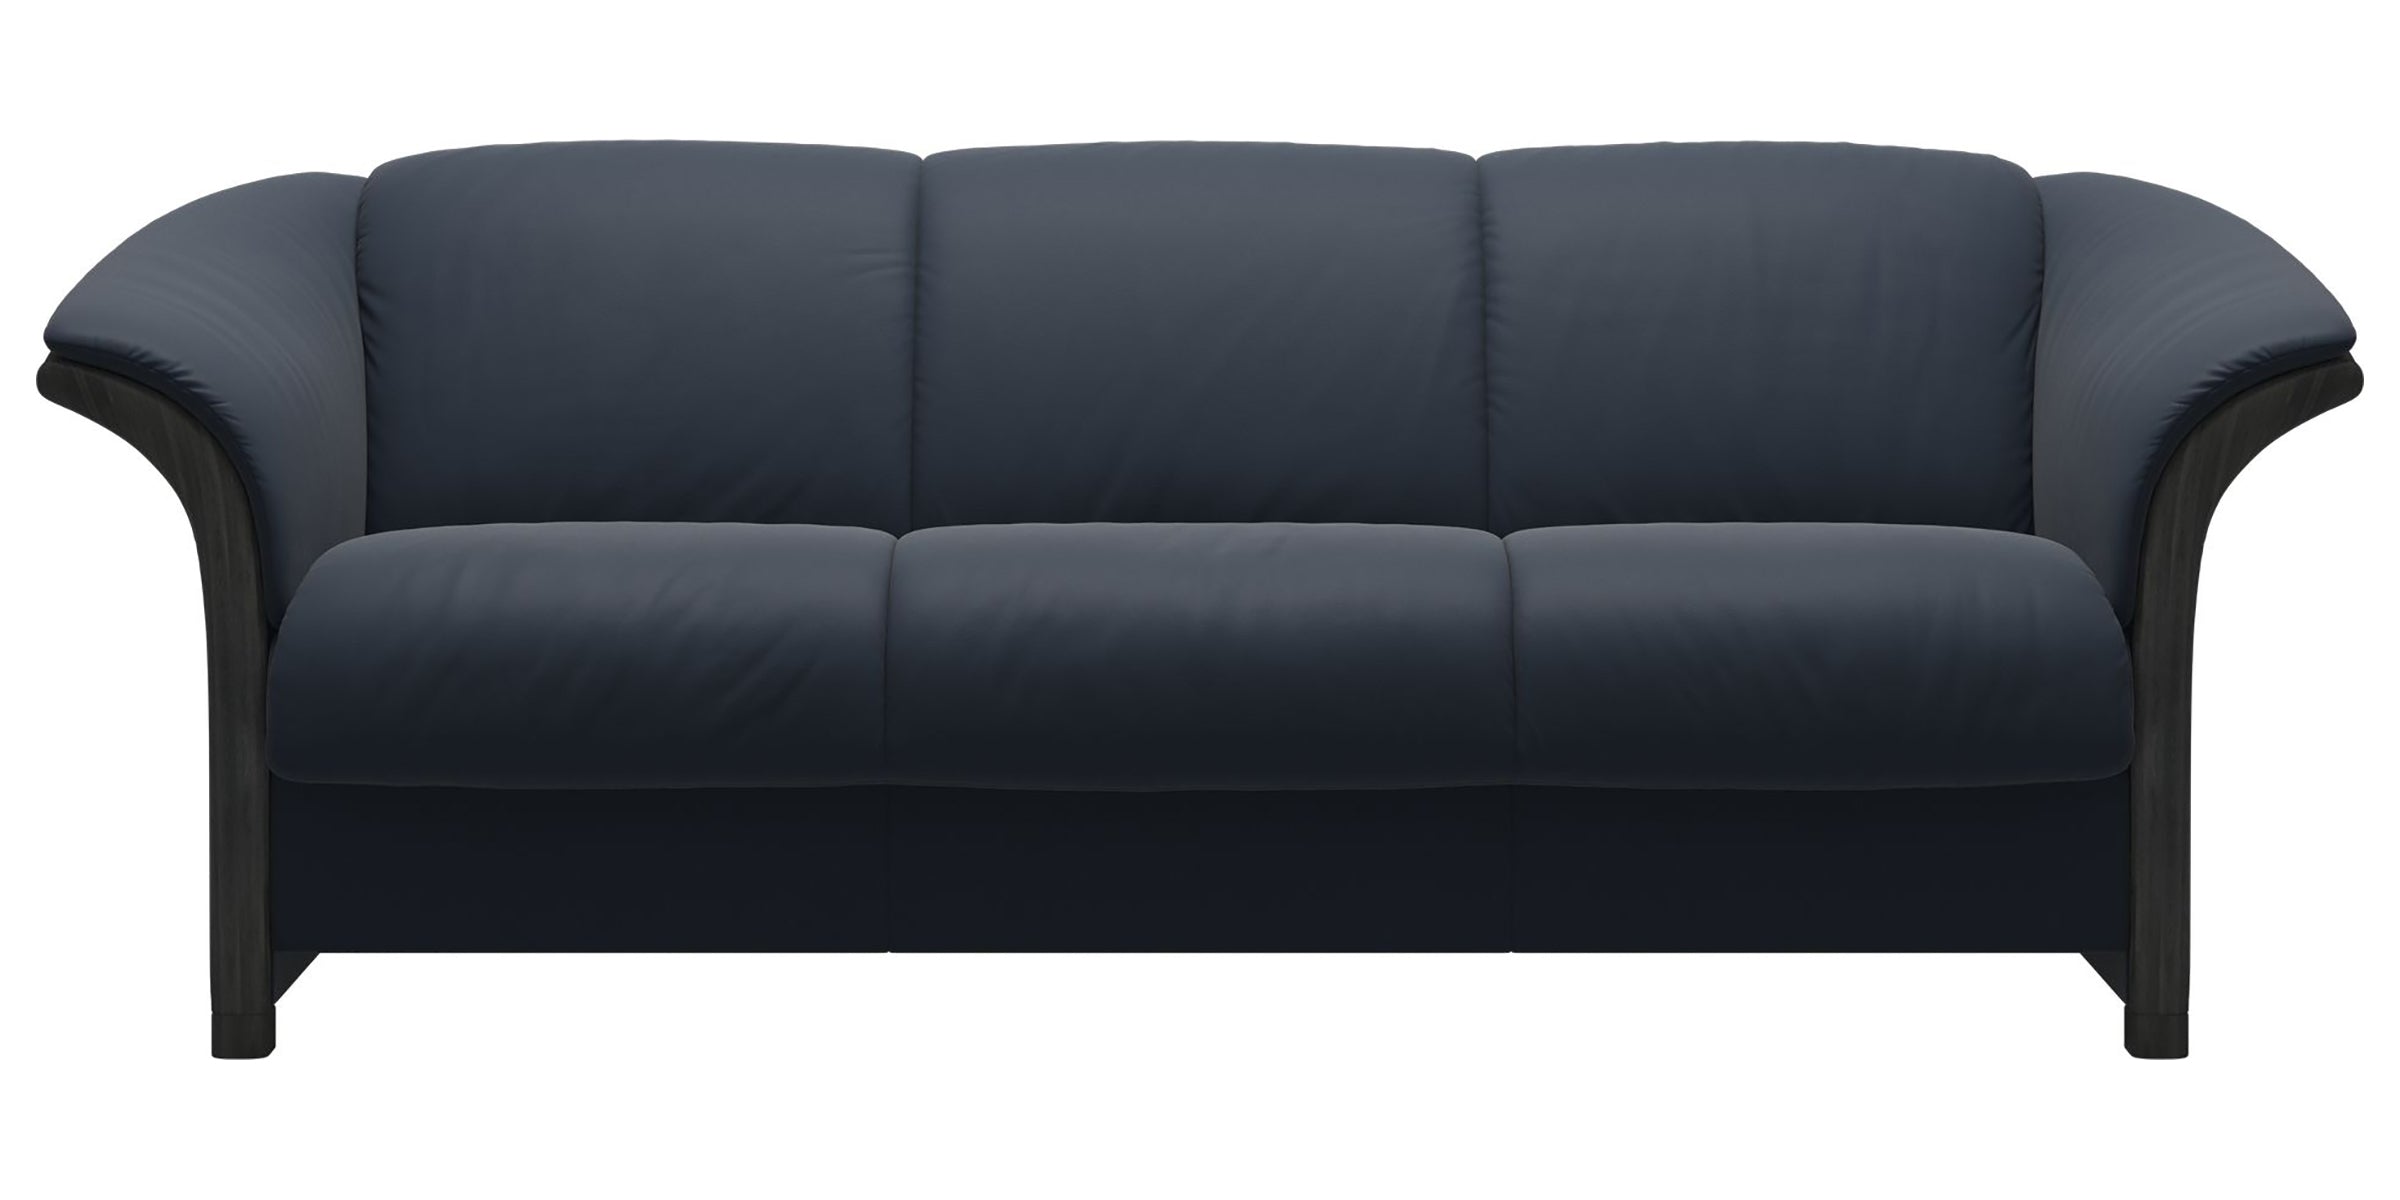 Paloma Leather Oxford Blue and Grey Arm Trim | Stressless Manhattan Sofa | Valley Ridge Furniture